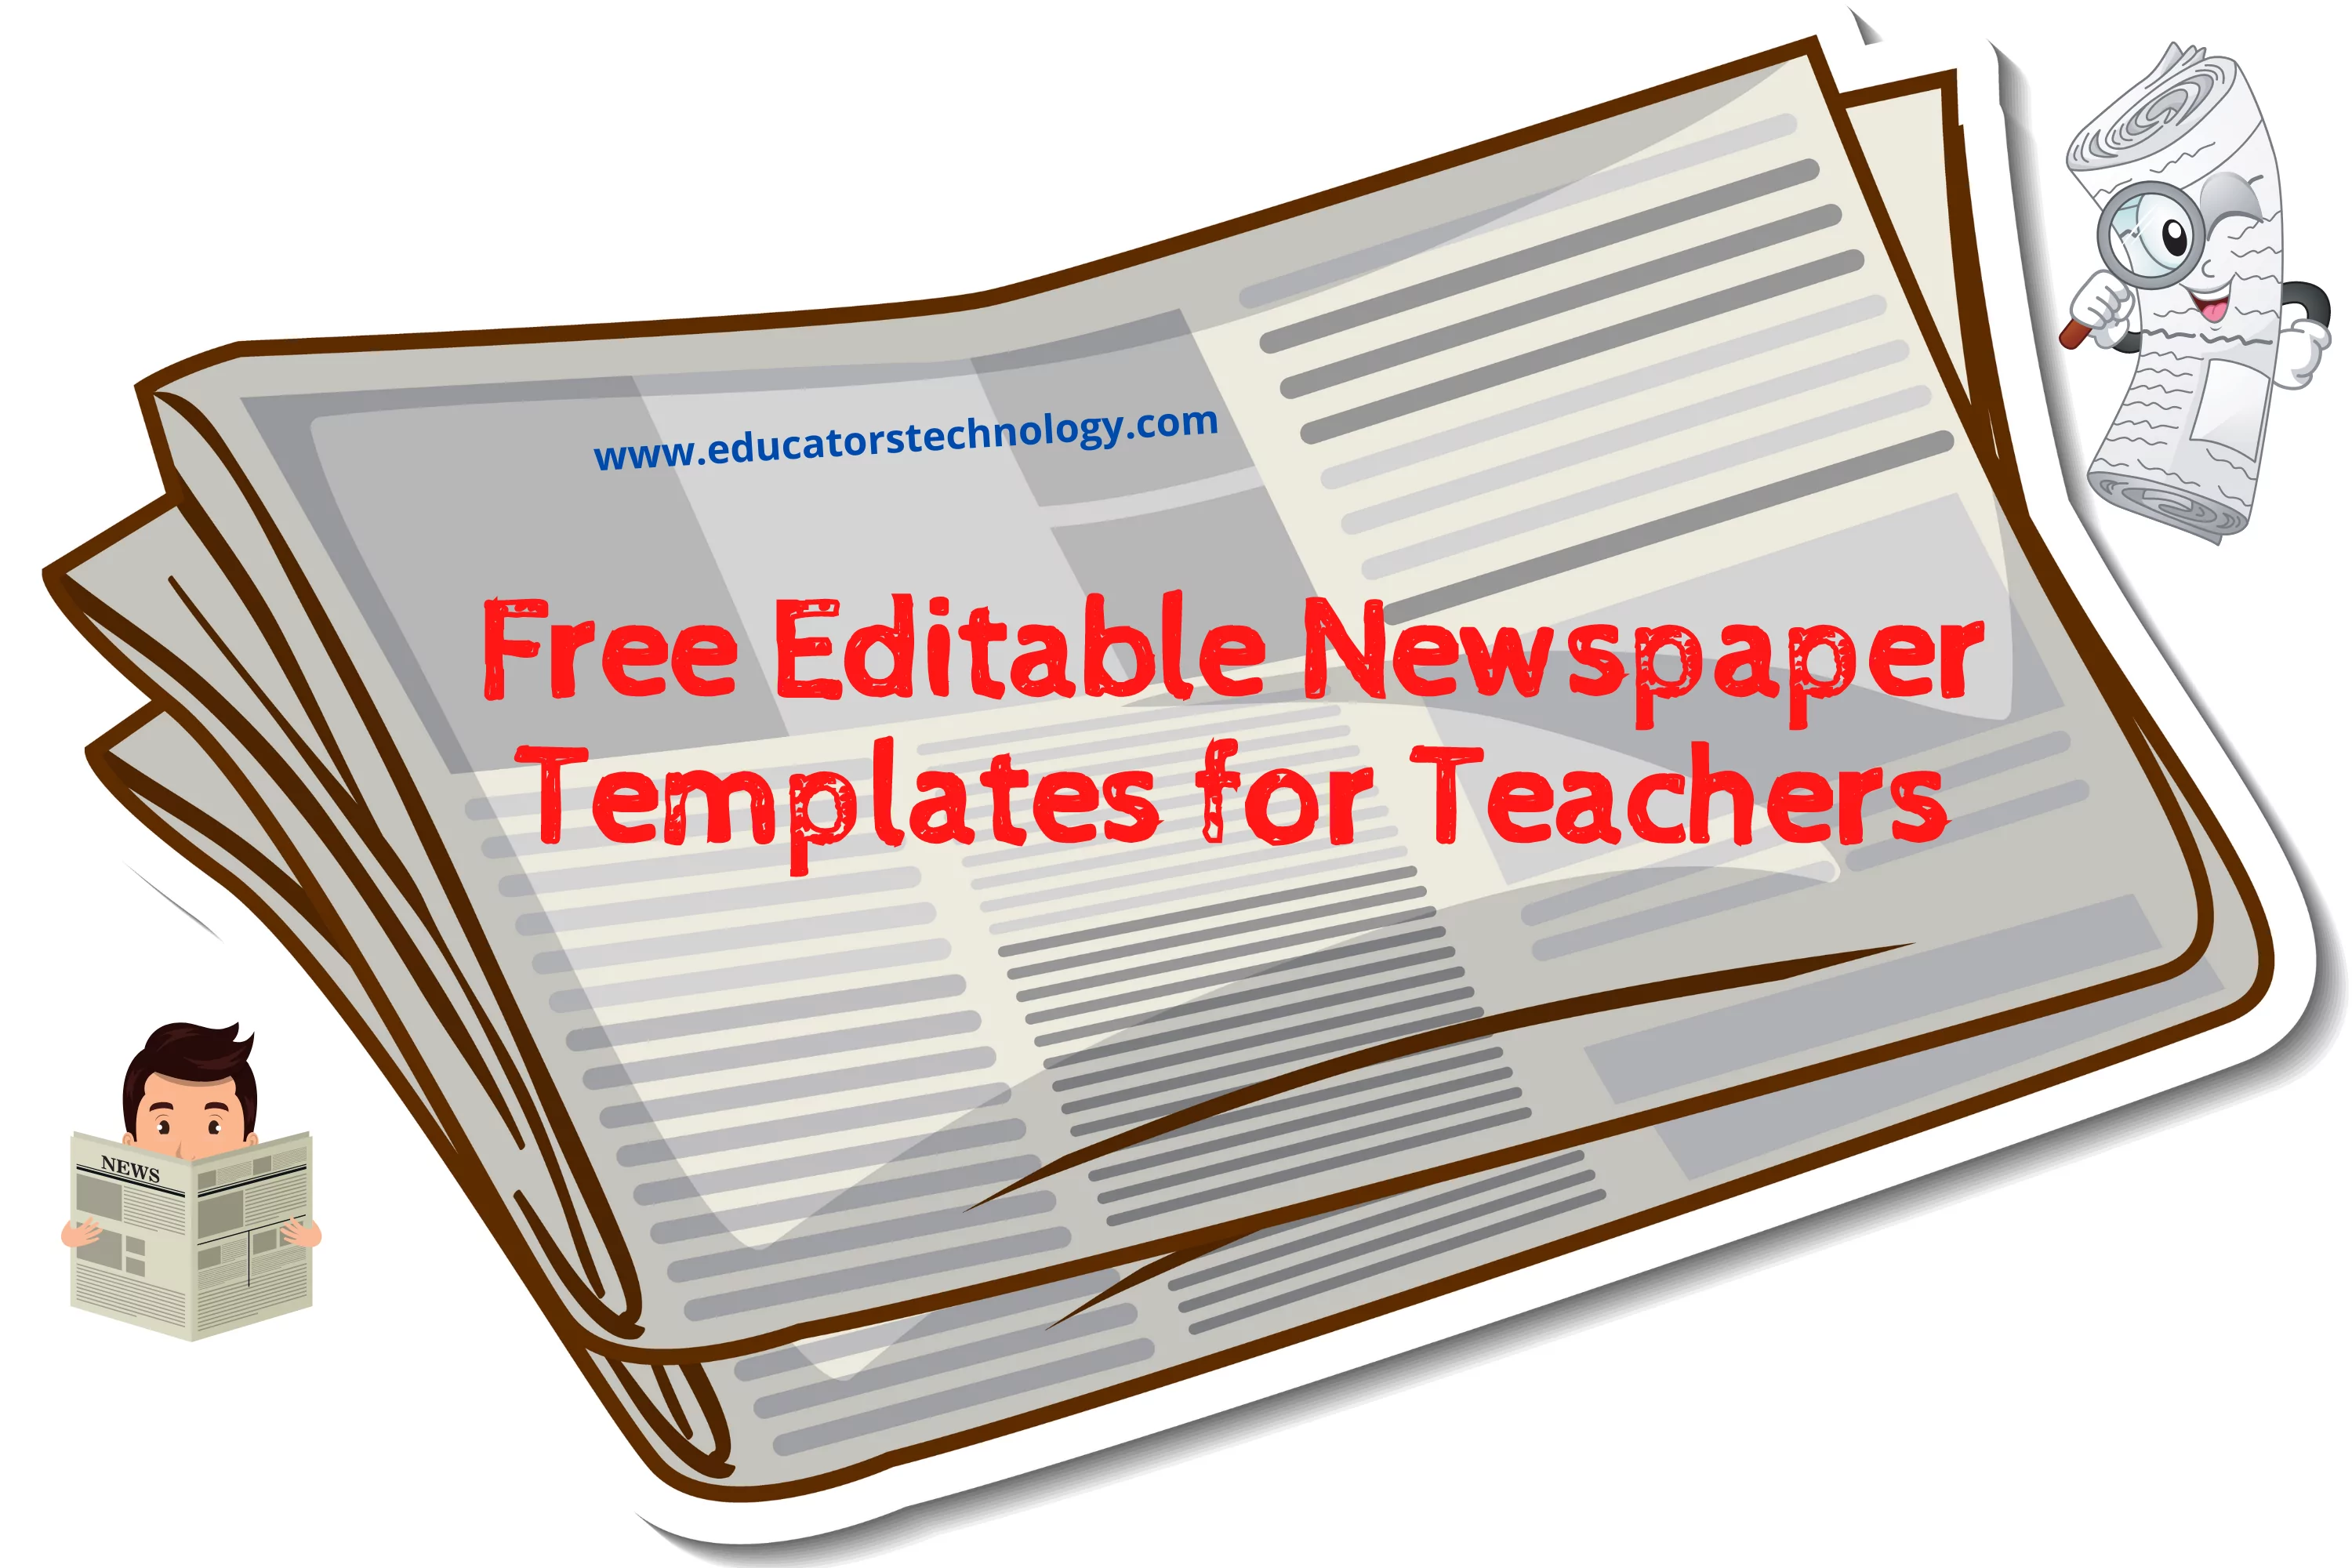 Free Editable Newspaper Templates - Educators Technology